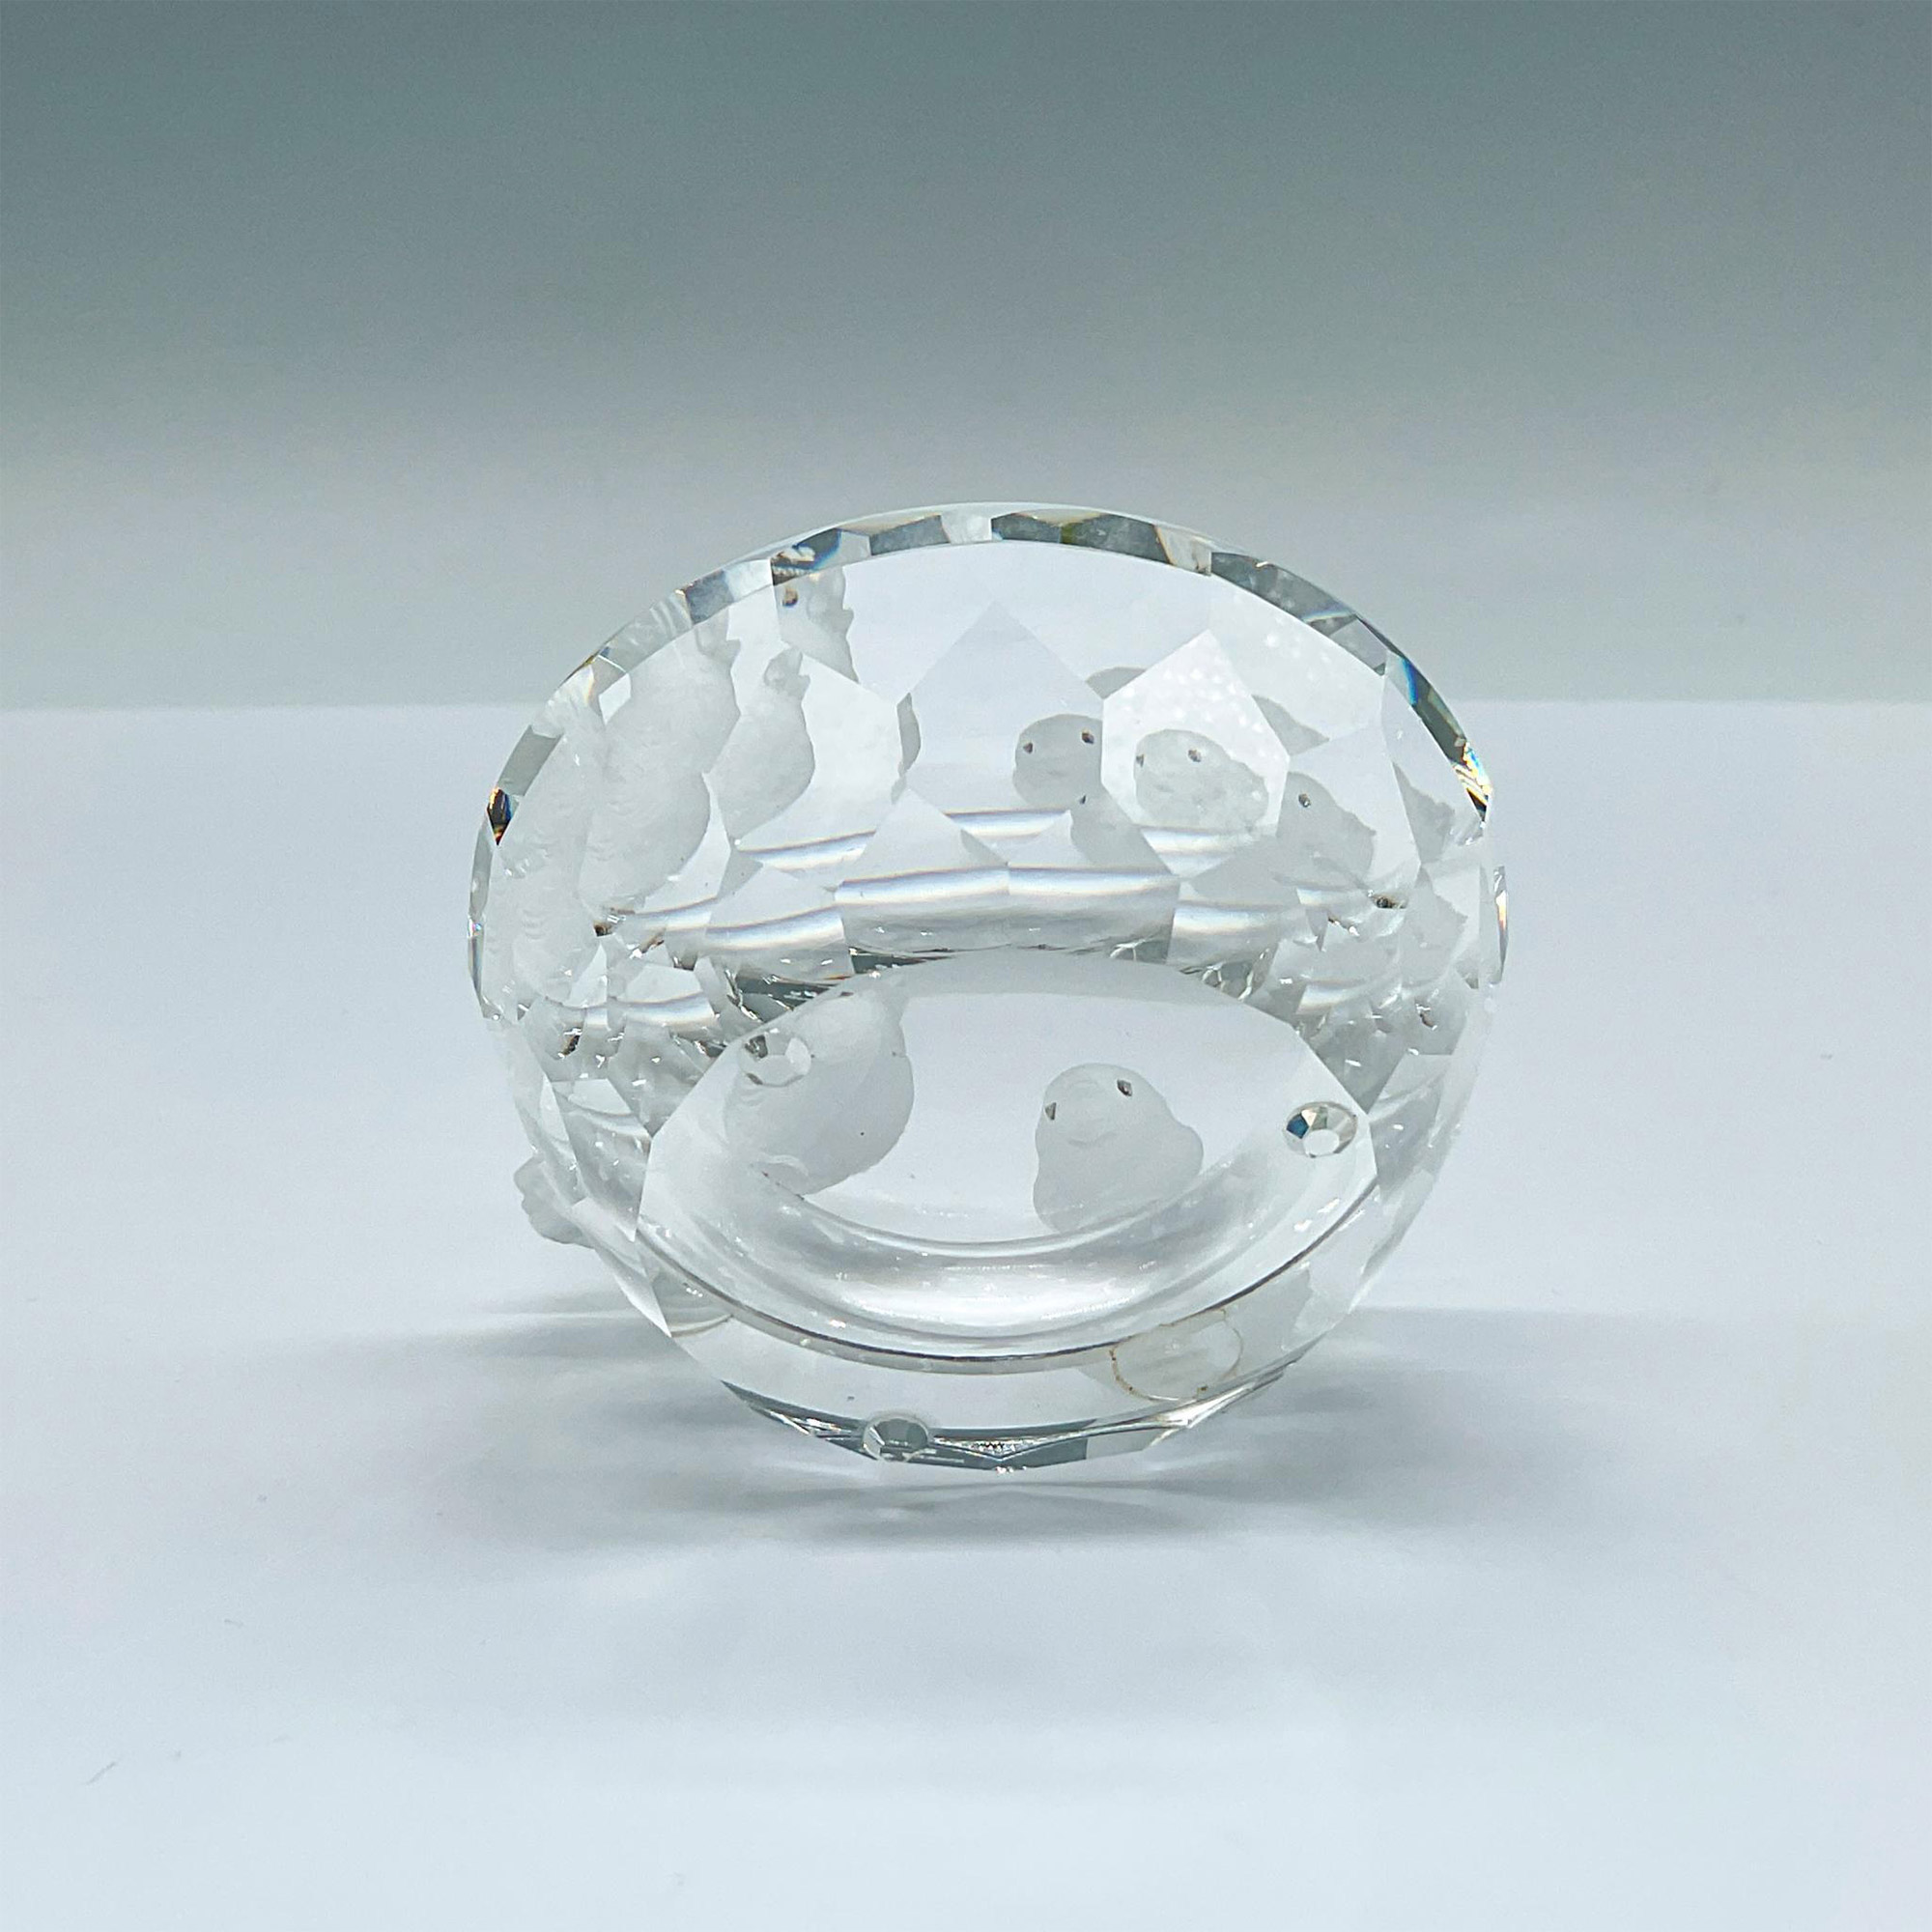 Swarovski Silver Crystal Figurine, Bird Bath - Image 3 of 4